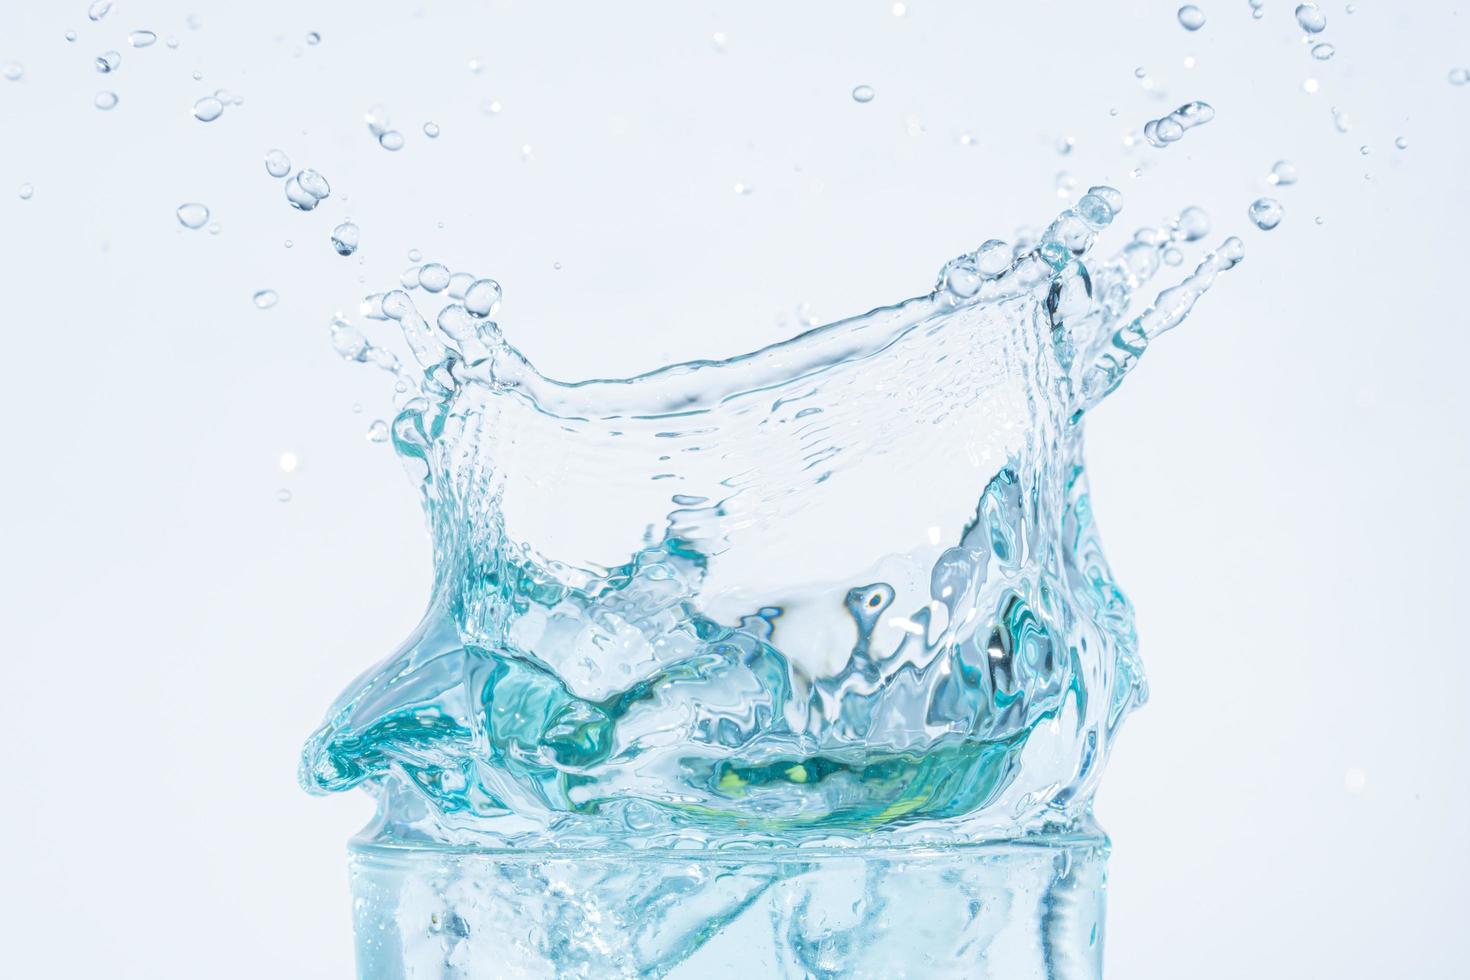 Water splash in a glass white background photo